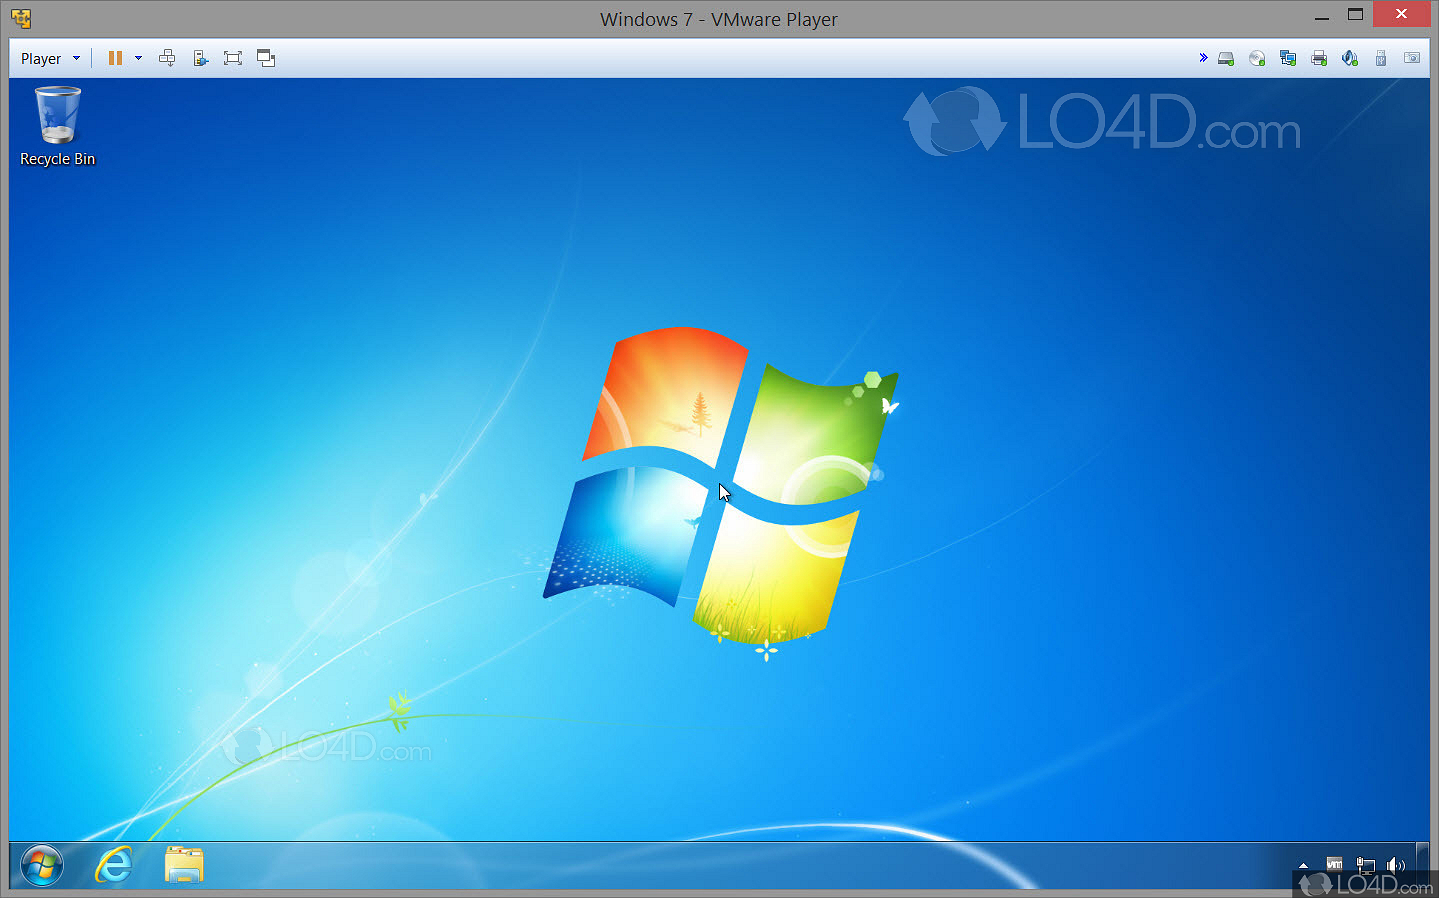 vmware workstation player free download for windows 7 64 bit